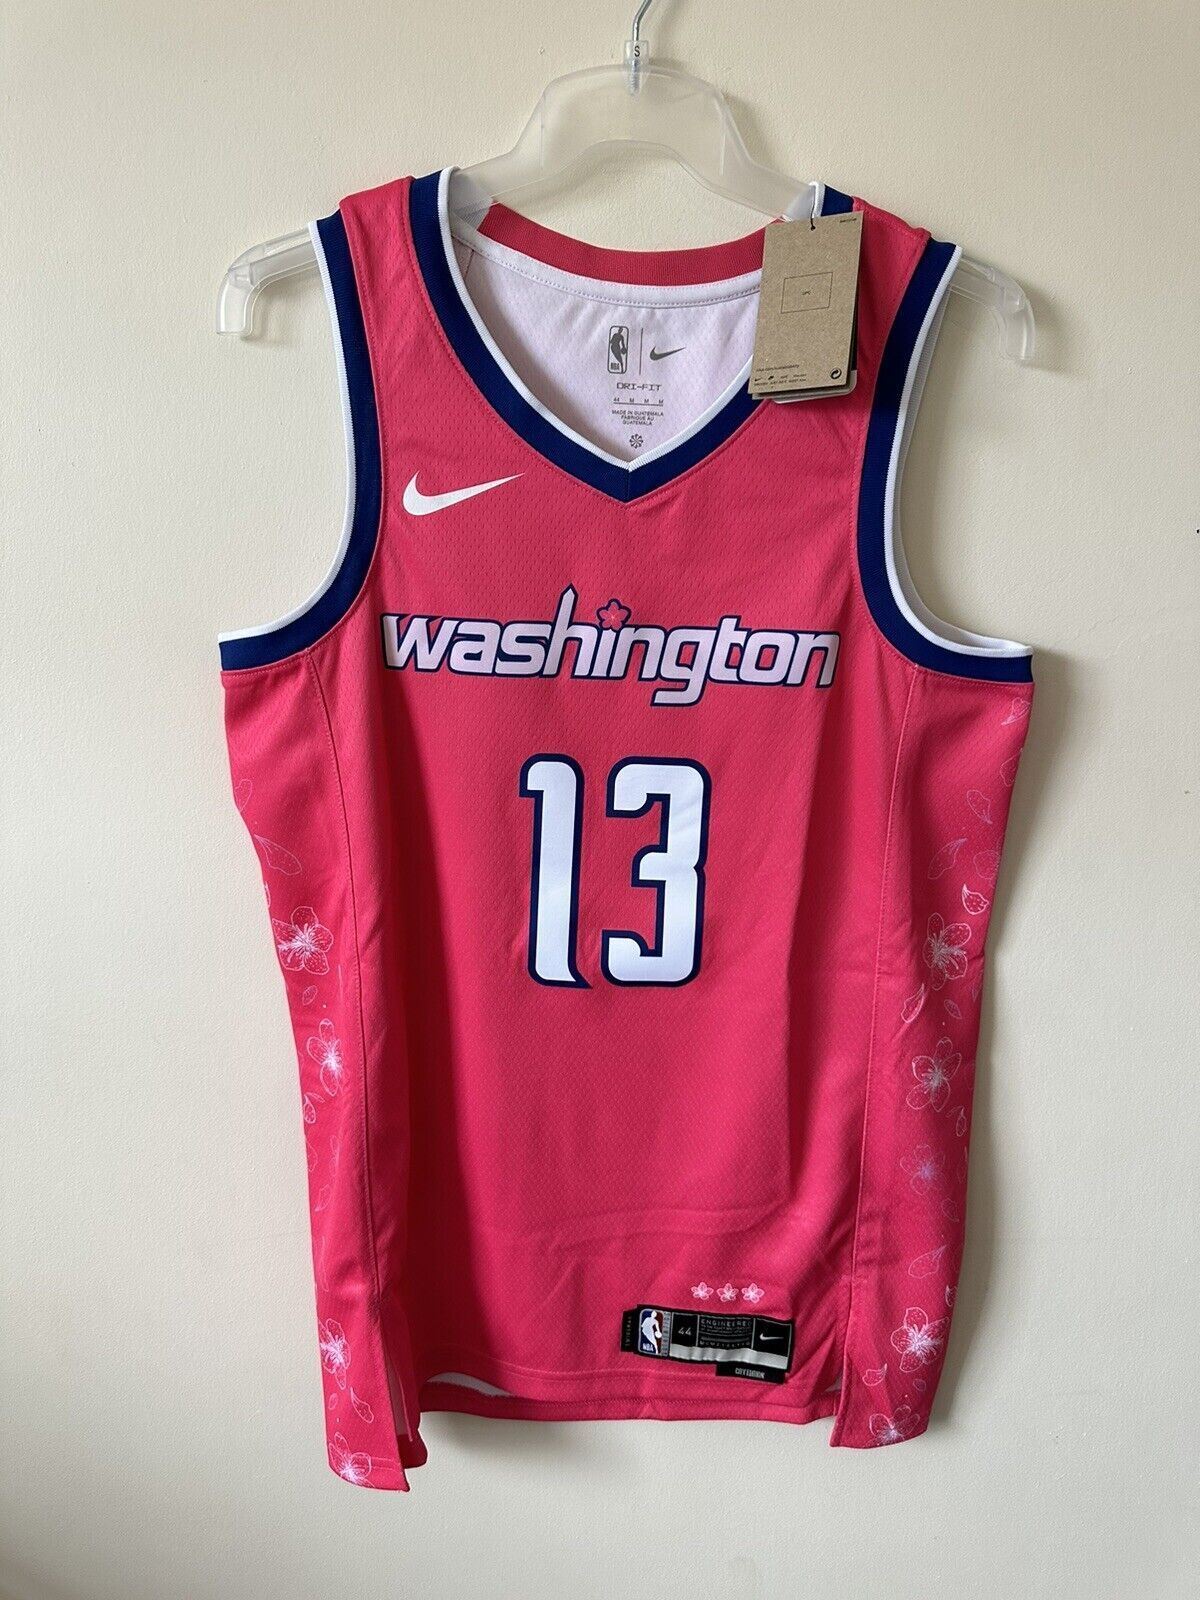 Nike NBA Washington Wizards City Edition Jersey BEAL 31 Basketball Mens Medium